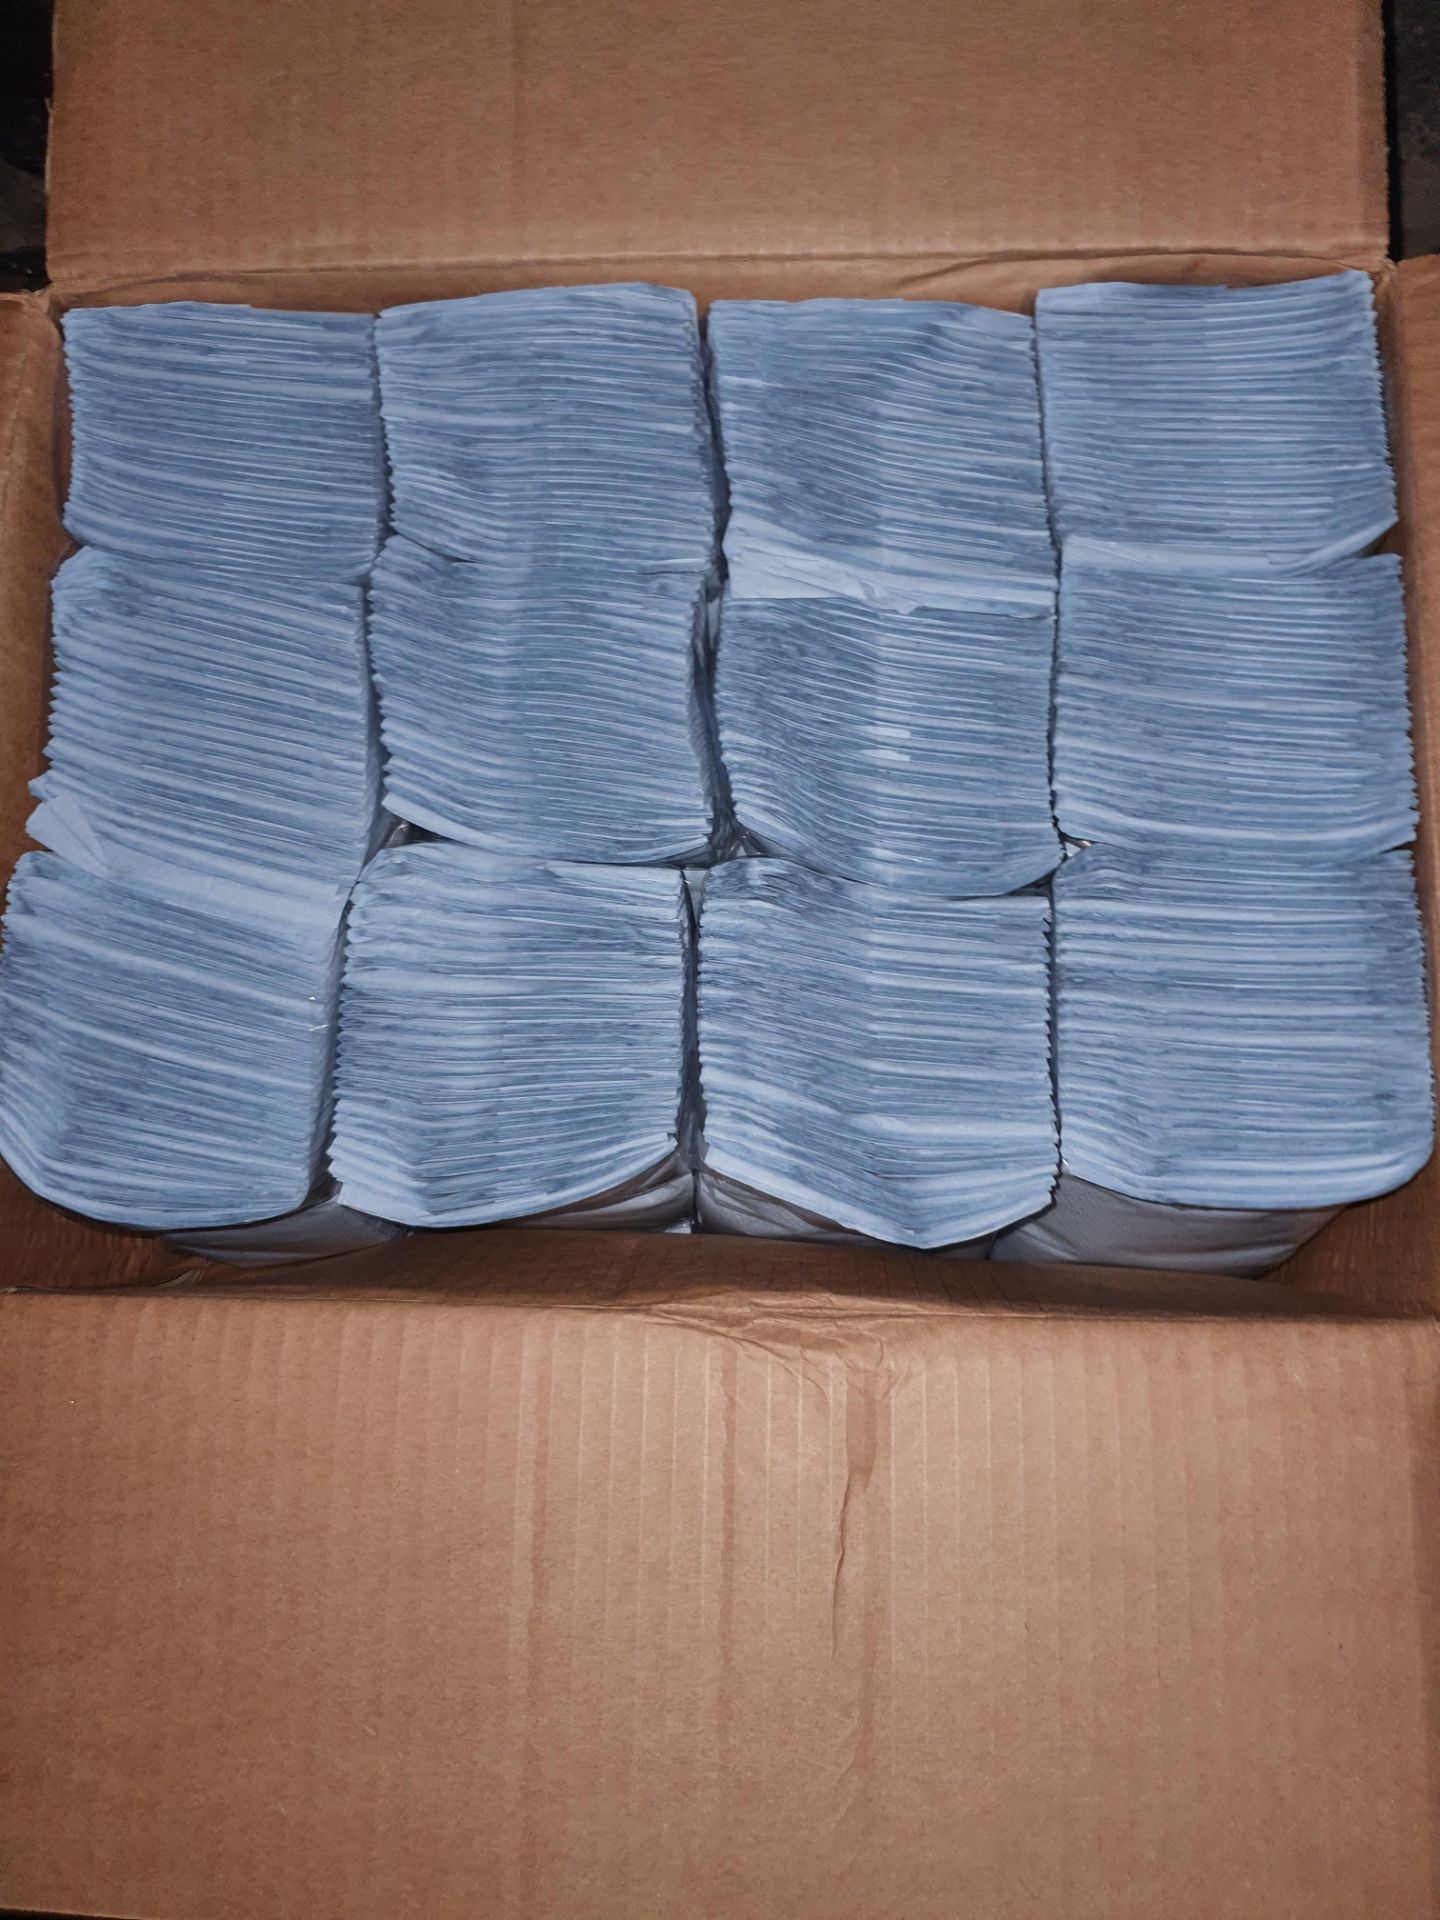 BOX OF BLUE PAPER TOWELS